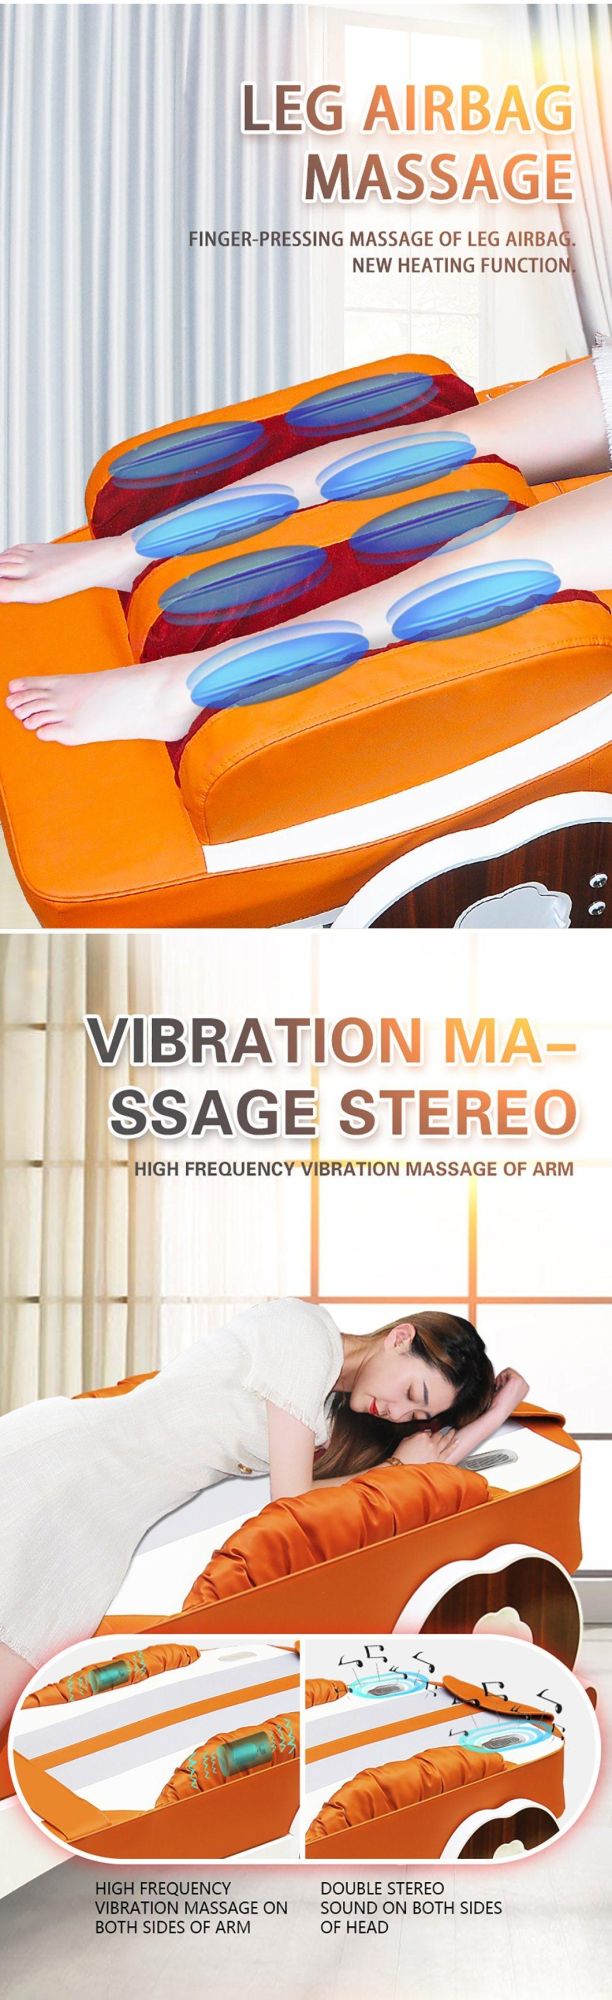 Adjustable Electric Massage Bed